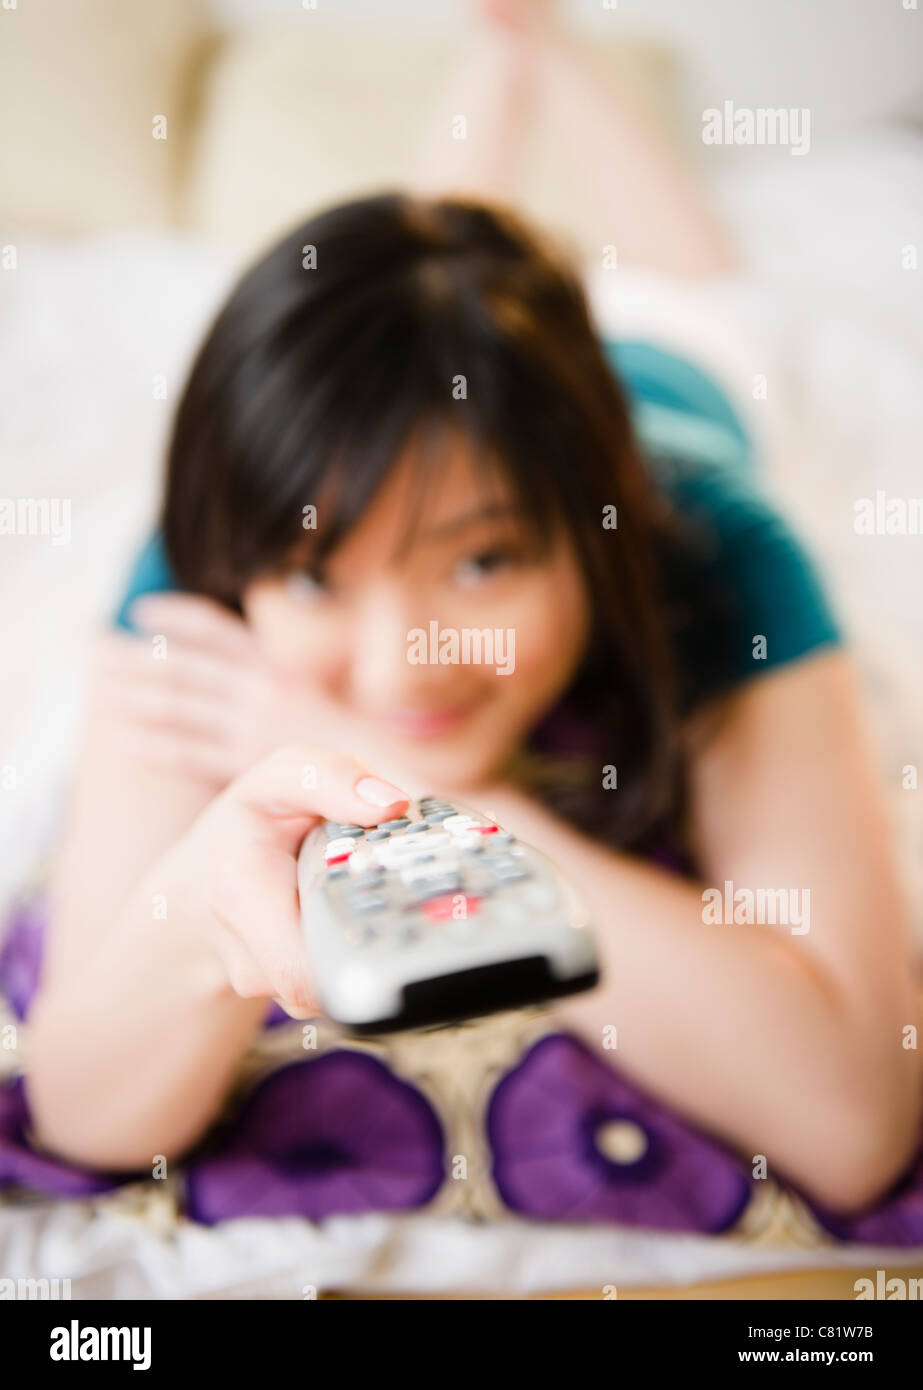 Korean woman holding remote control Stock Photo